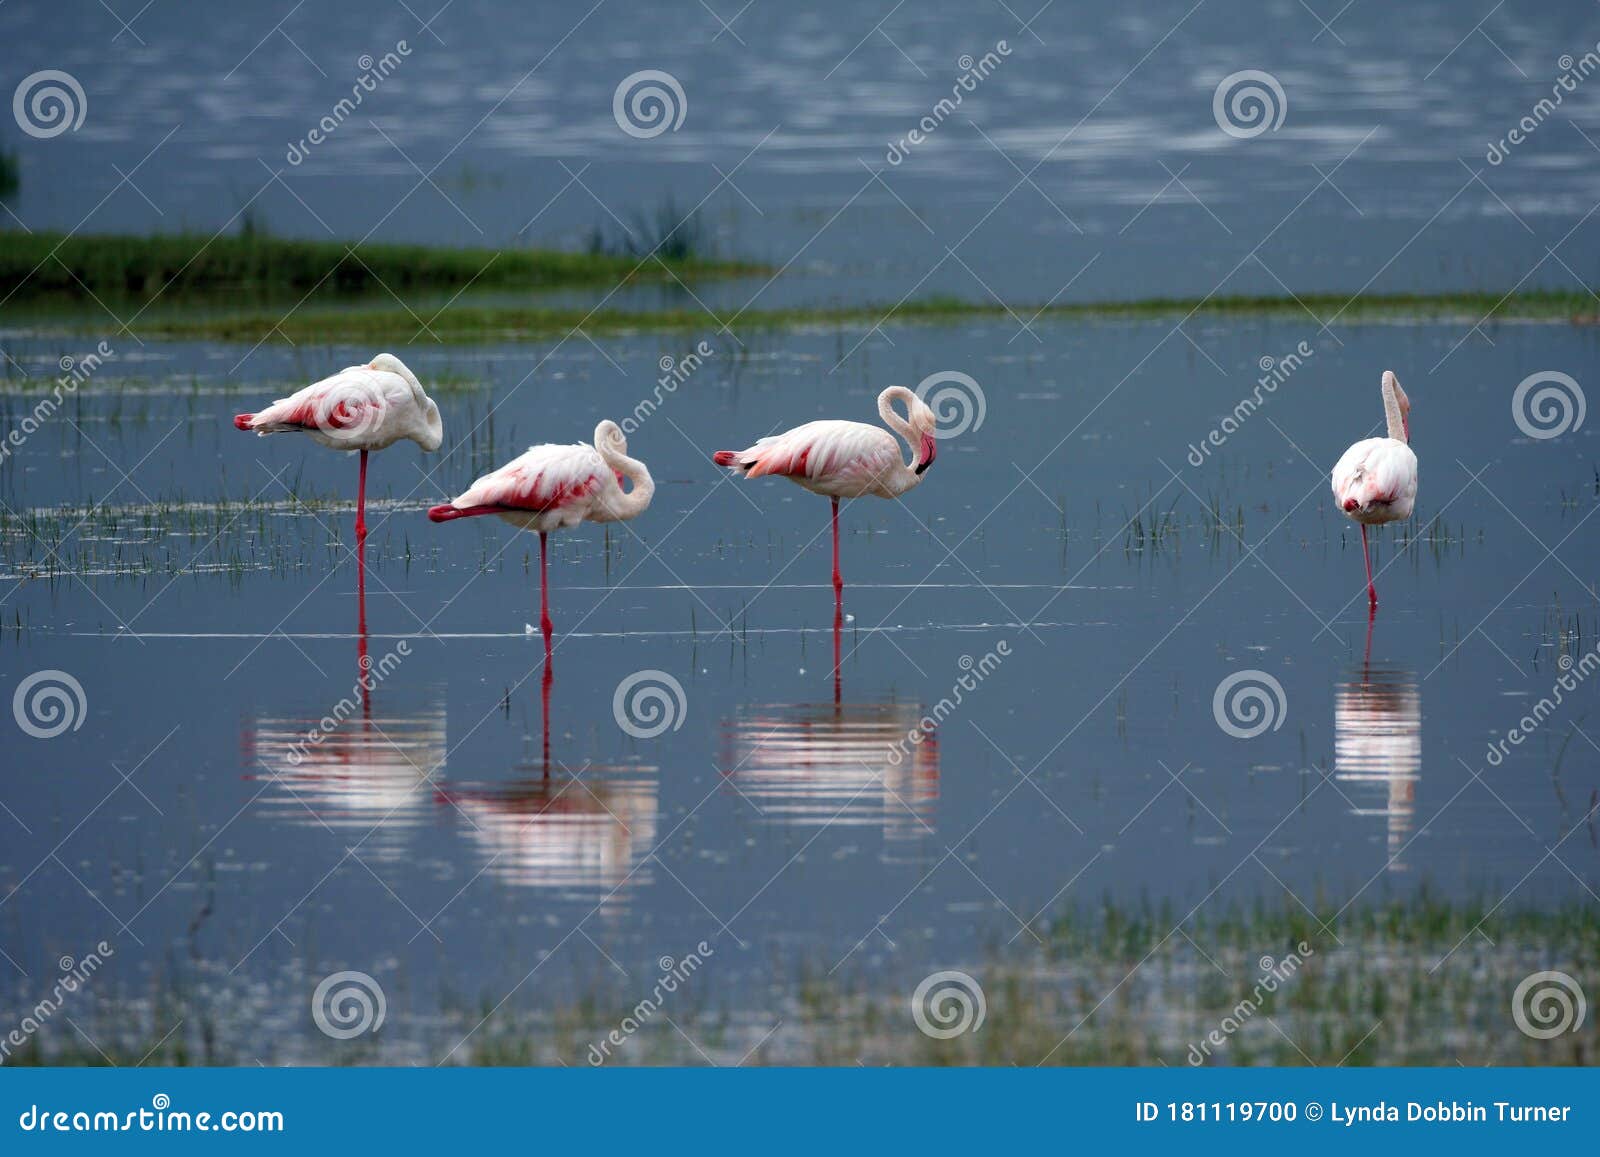 Flamingos Near Serengeti National Park Tanzania Africa Stock Photo Image Of Bird Caribbean